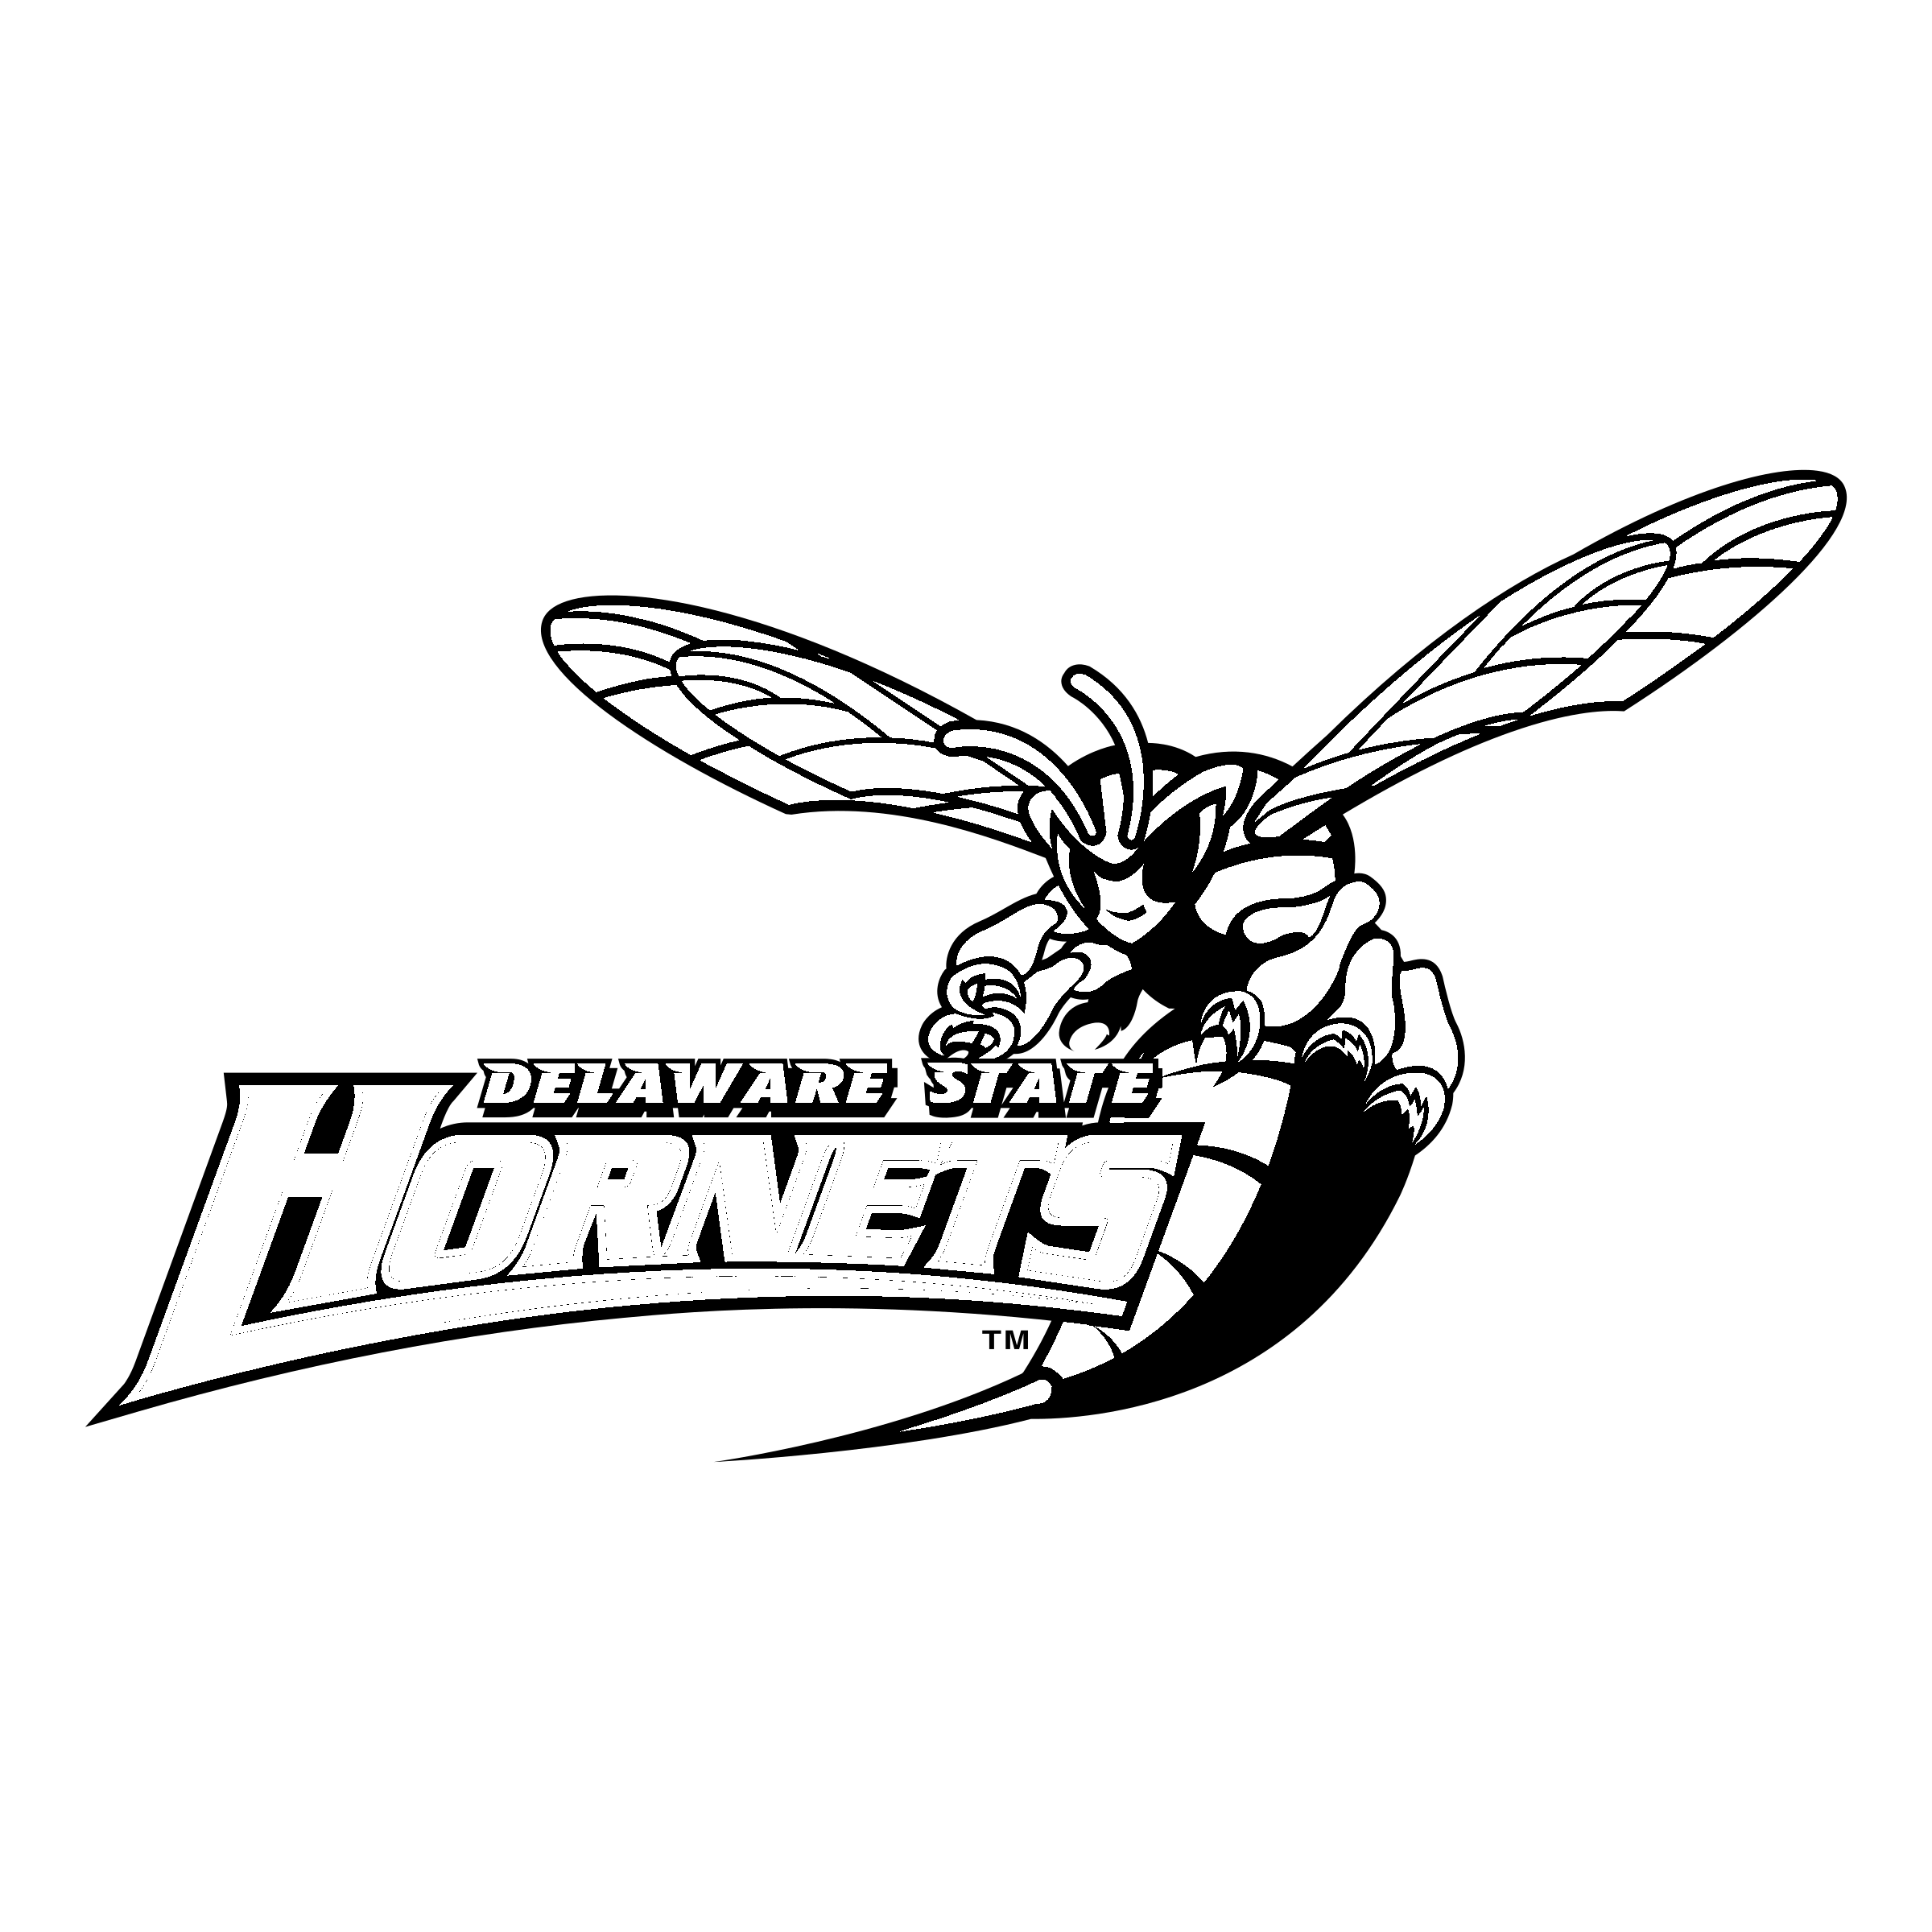 Black and White Hornets Logo - Delaware State Hornets Logo PNG Transparent & SVG Vector - Freebie ...